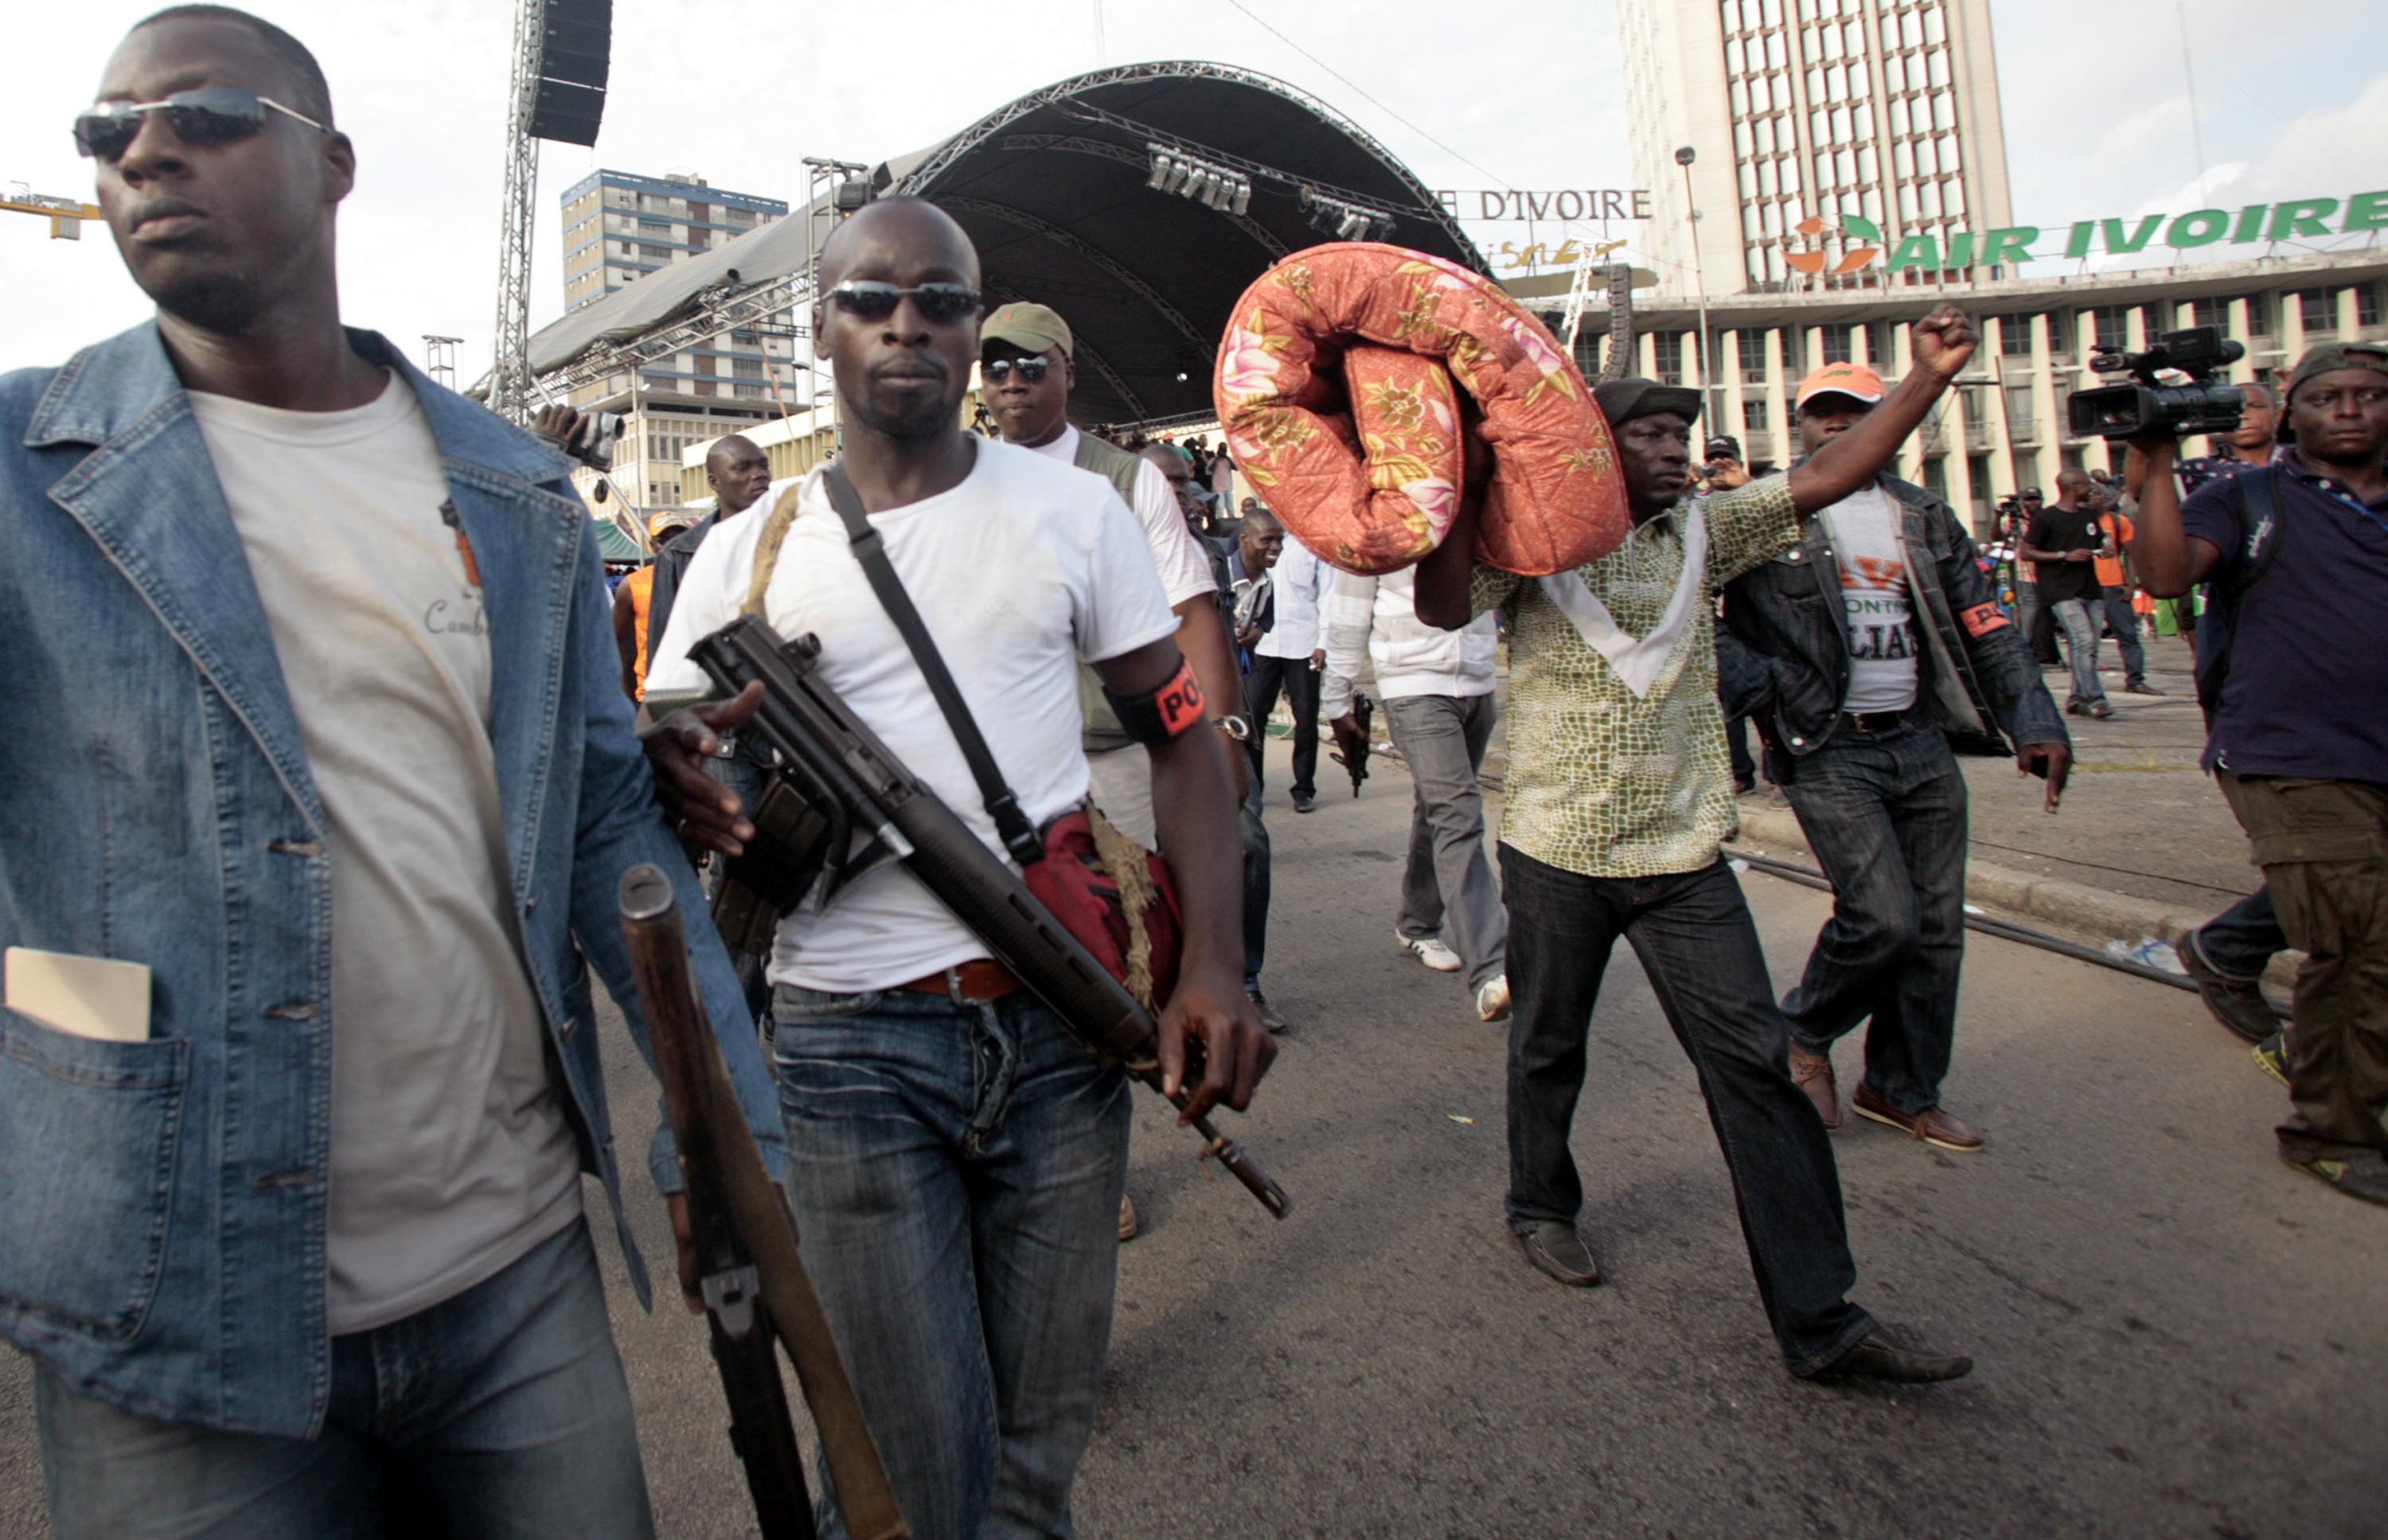 våld, FN, Gbagbo, President, Elfenbenskusten, Brott och straff, Krig, Ouattara